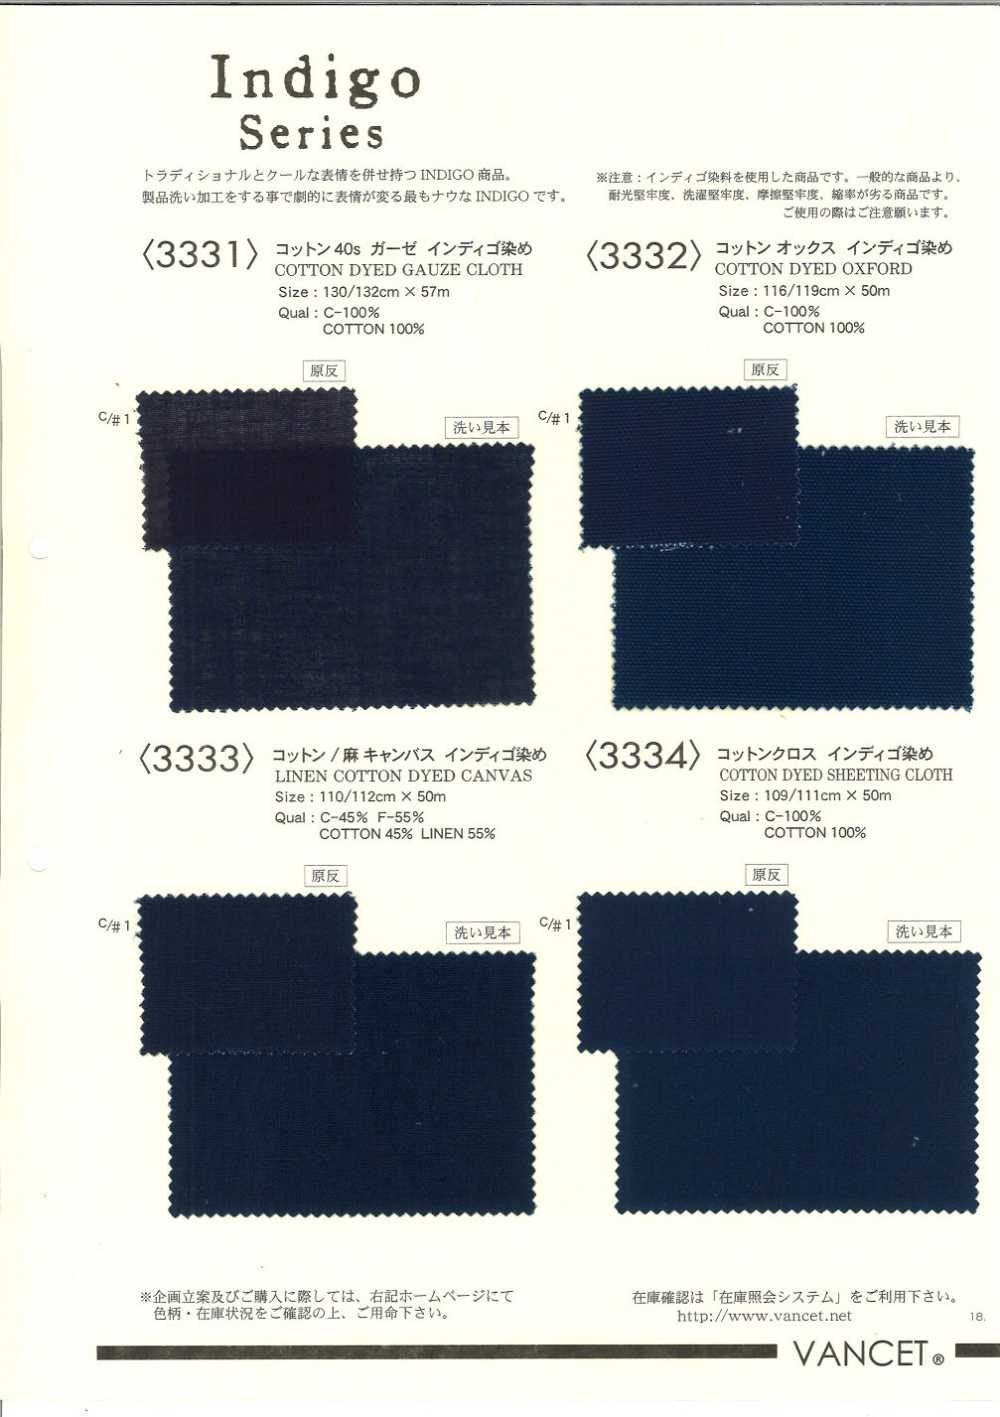 3332 Teñido Oxford Indigo De Algodón[Fabrica Textil] VANCET